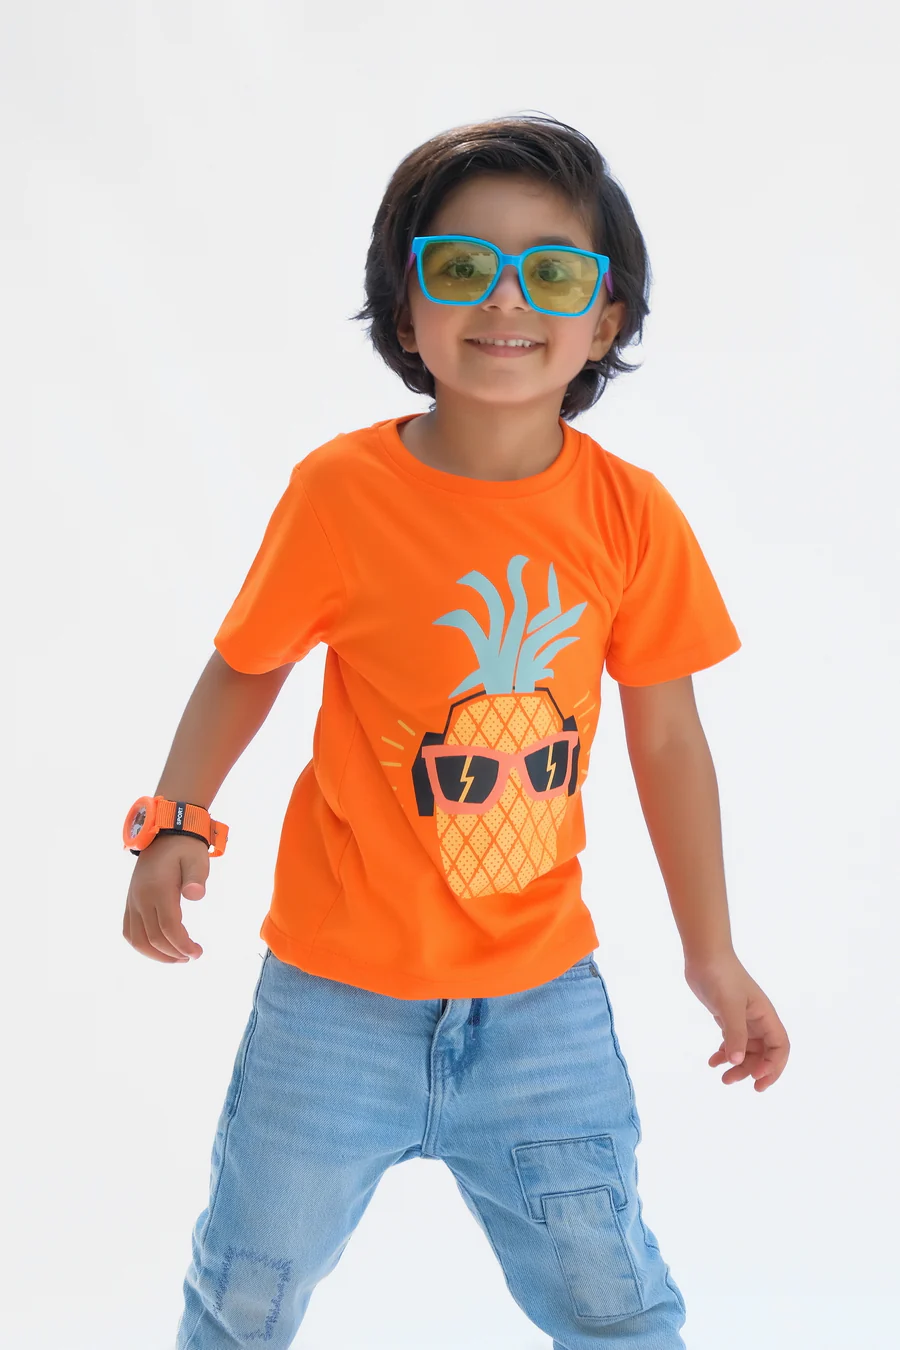 Cool Pineapple - Half Sleeves T-Shirts For Kids - Orange - SBT-336